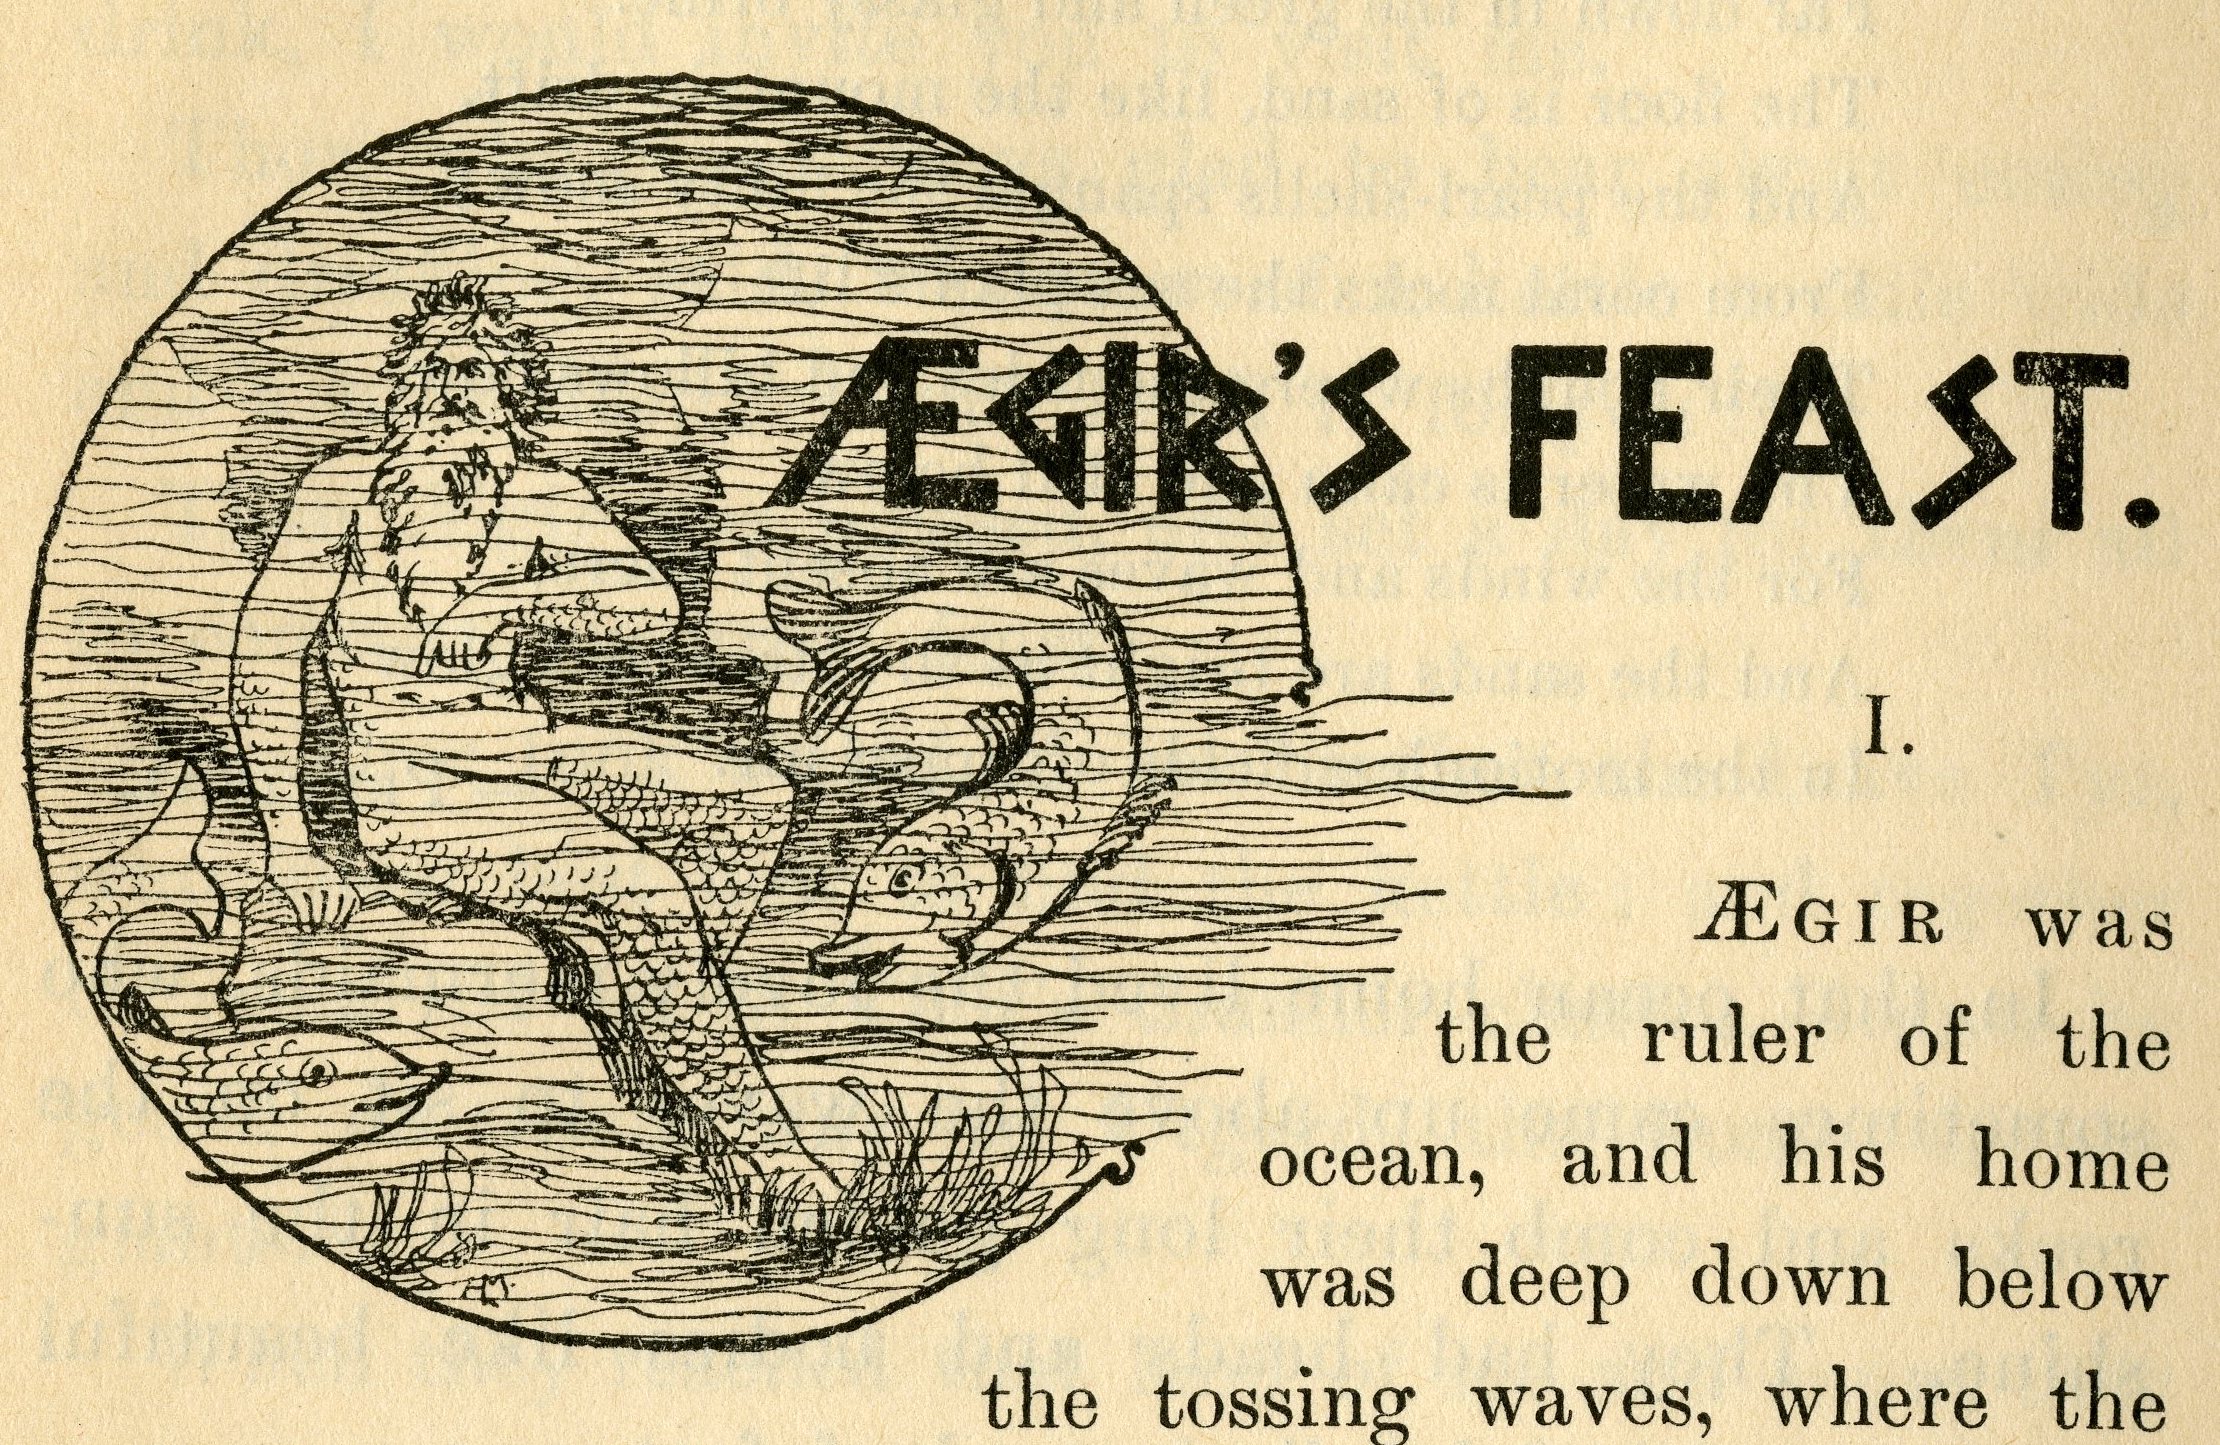 Illustrated Title Header for "Aegir's
                                Feast"